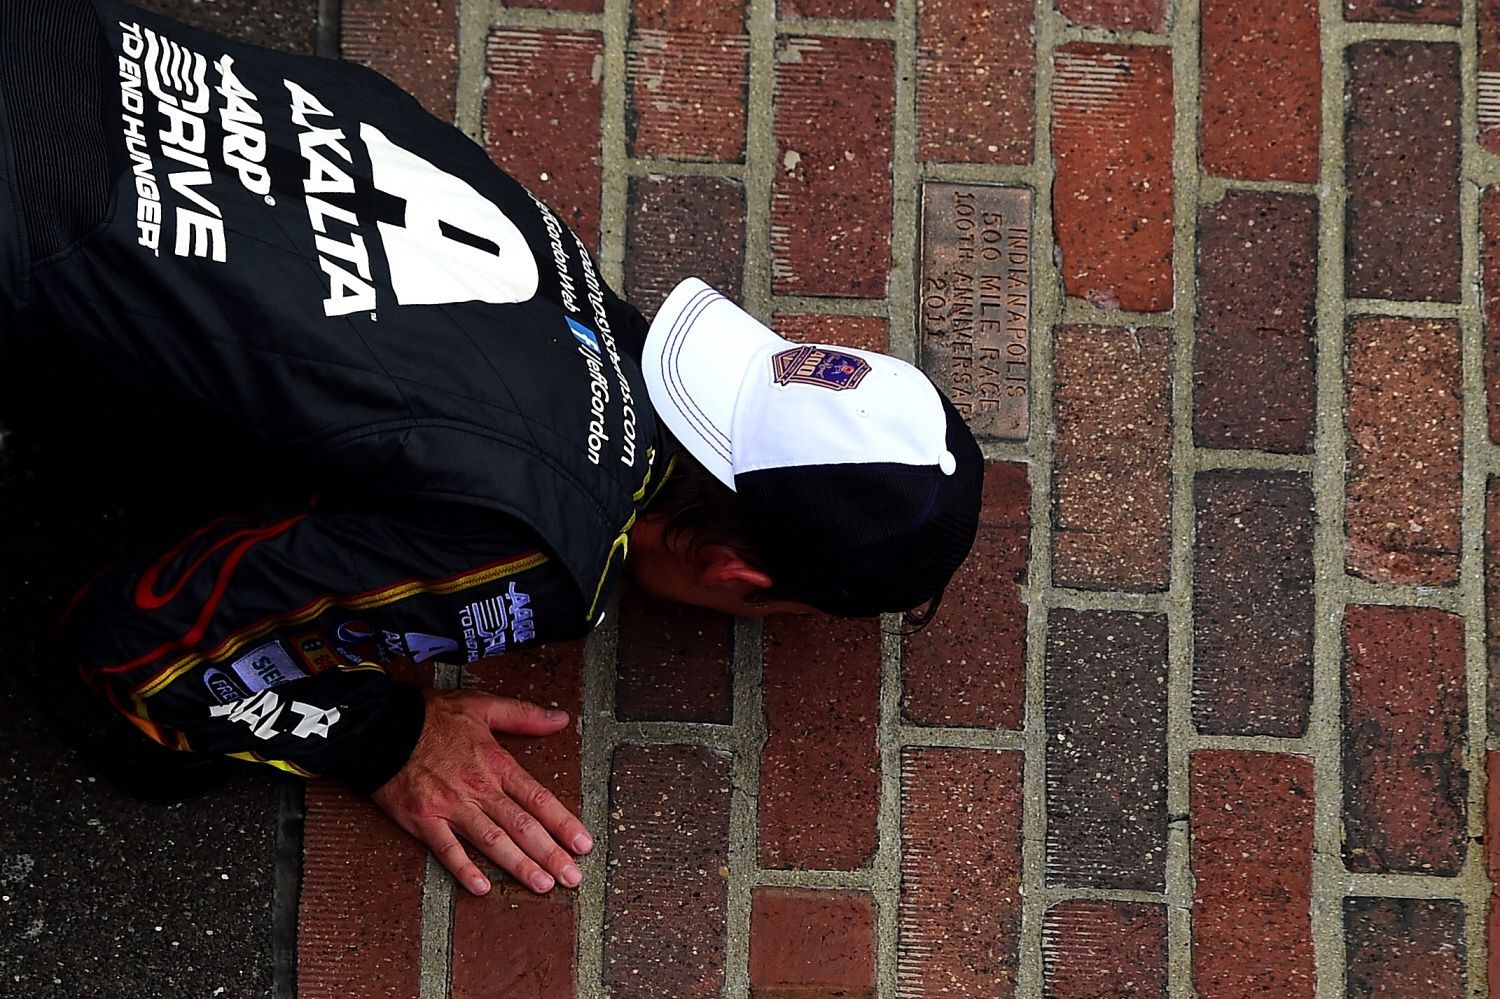 NASCAR 2014: Jeff Gordon v Indianapolis